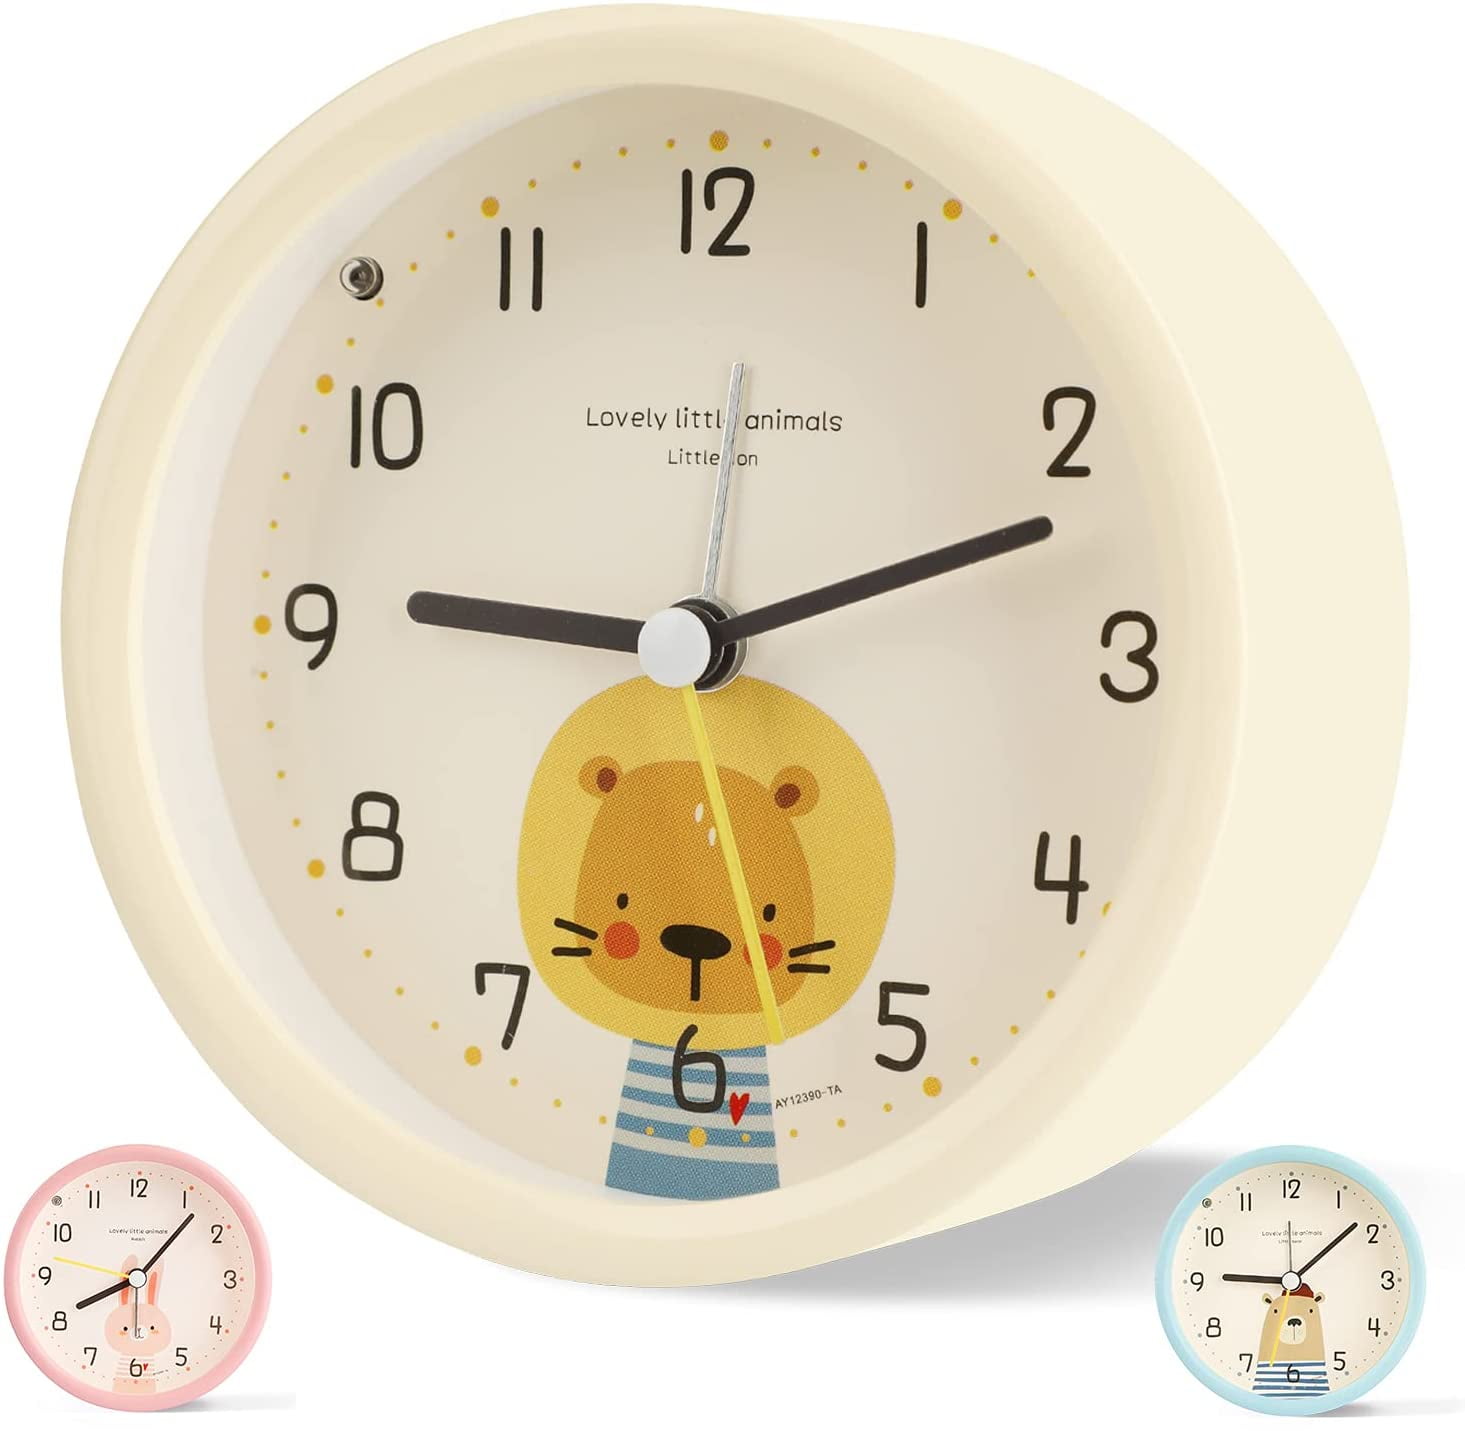 Details about   Alarm Clock Silent Snooze Clocks Plastic Kids Bedroom Decor Home Gift Quartz New 